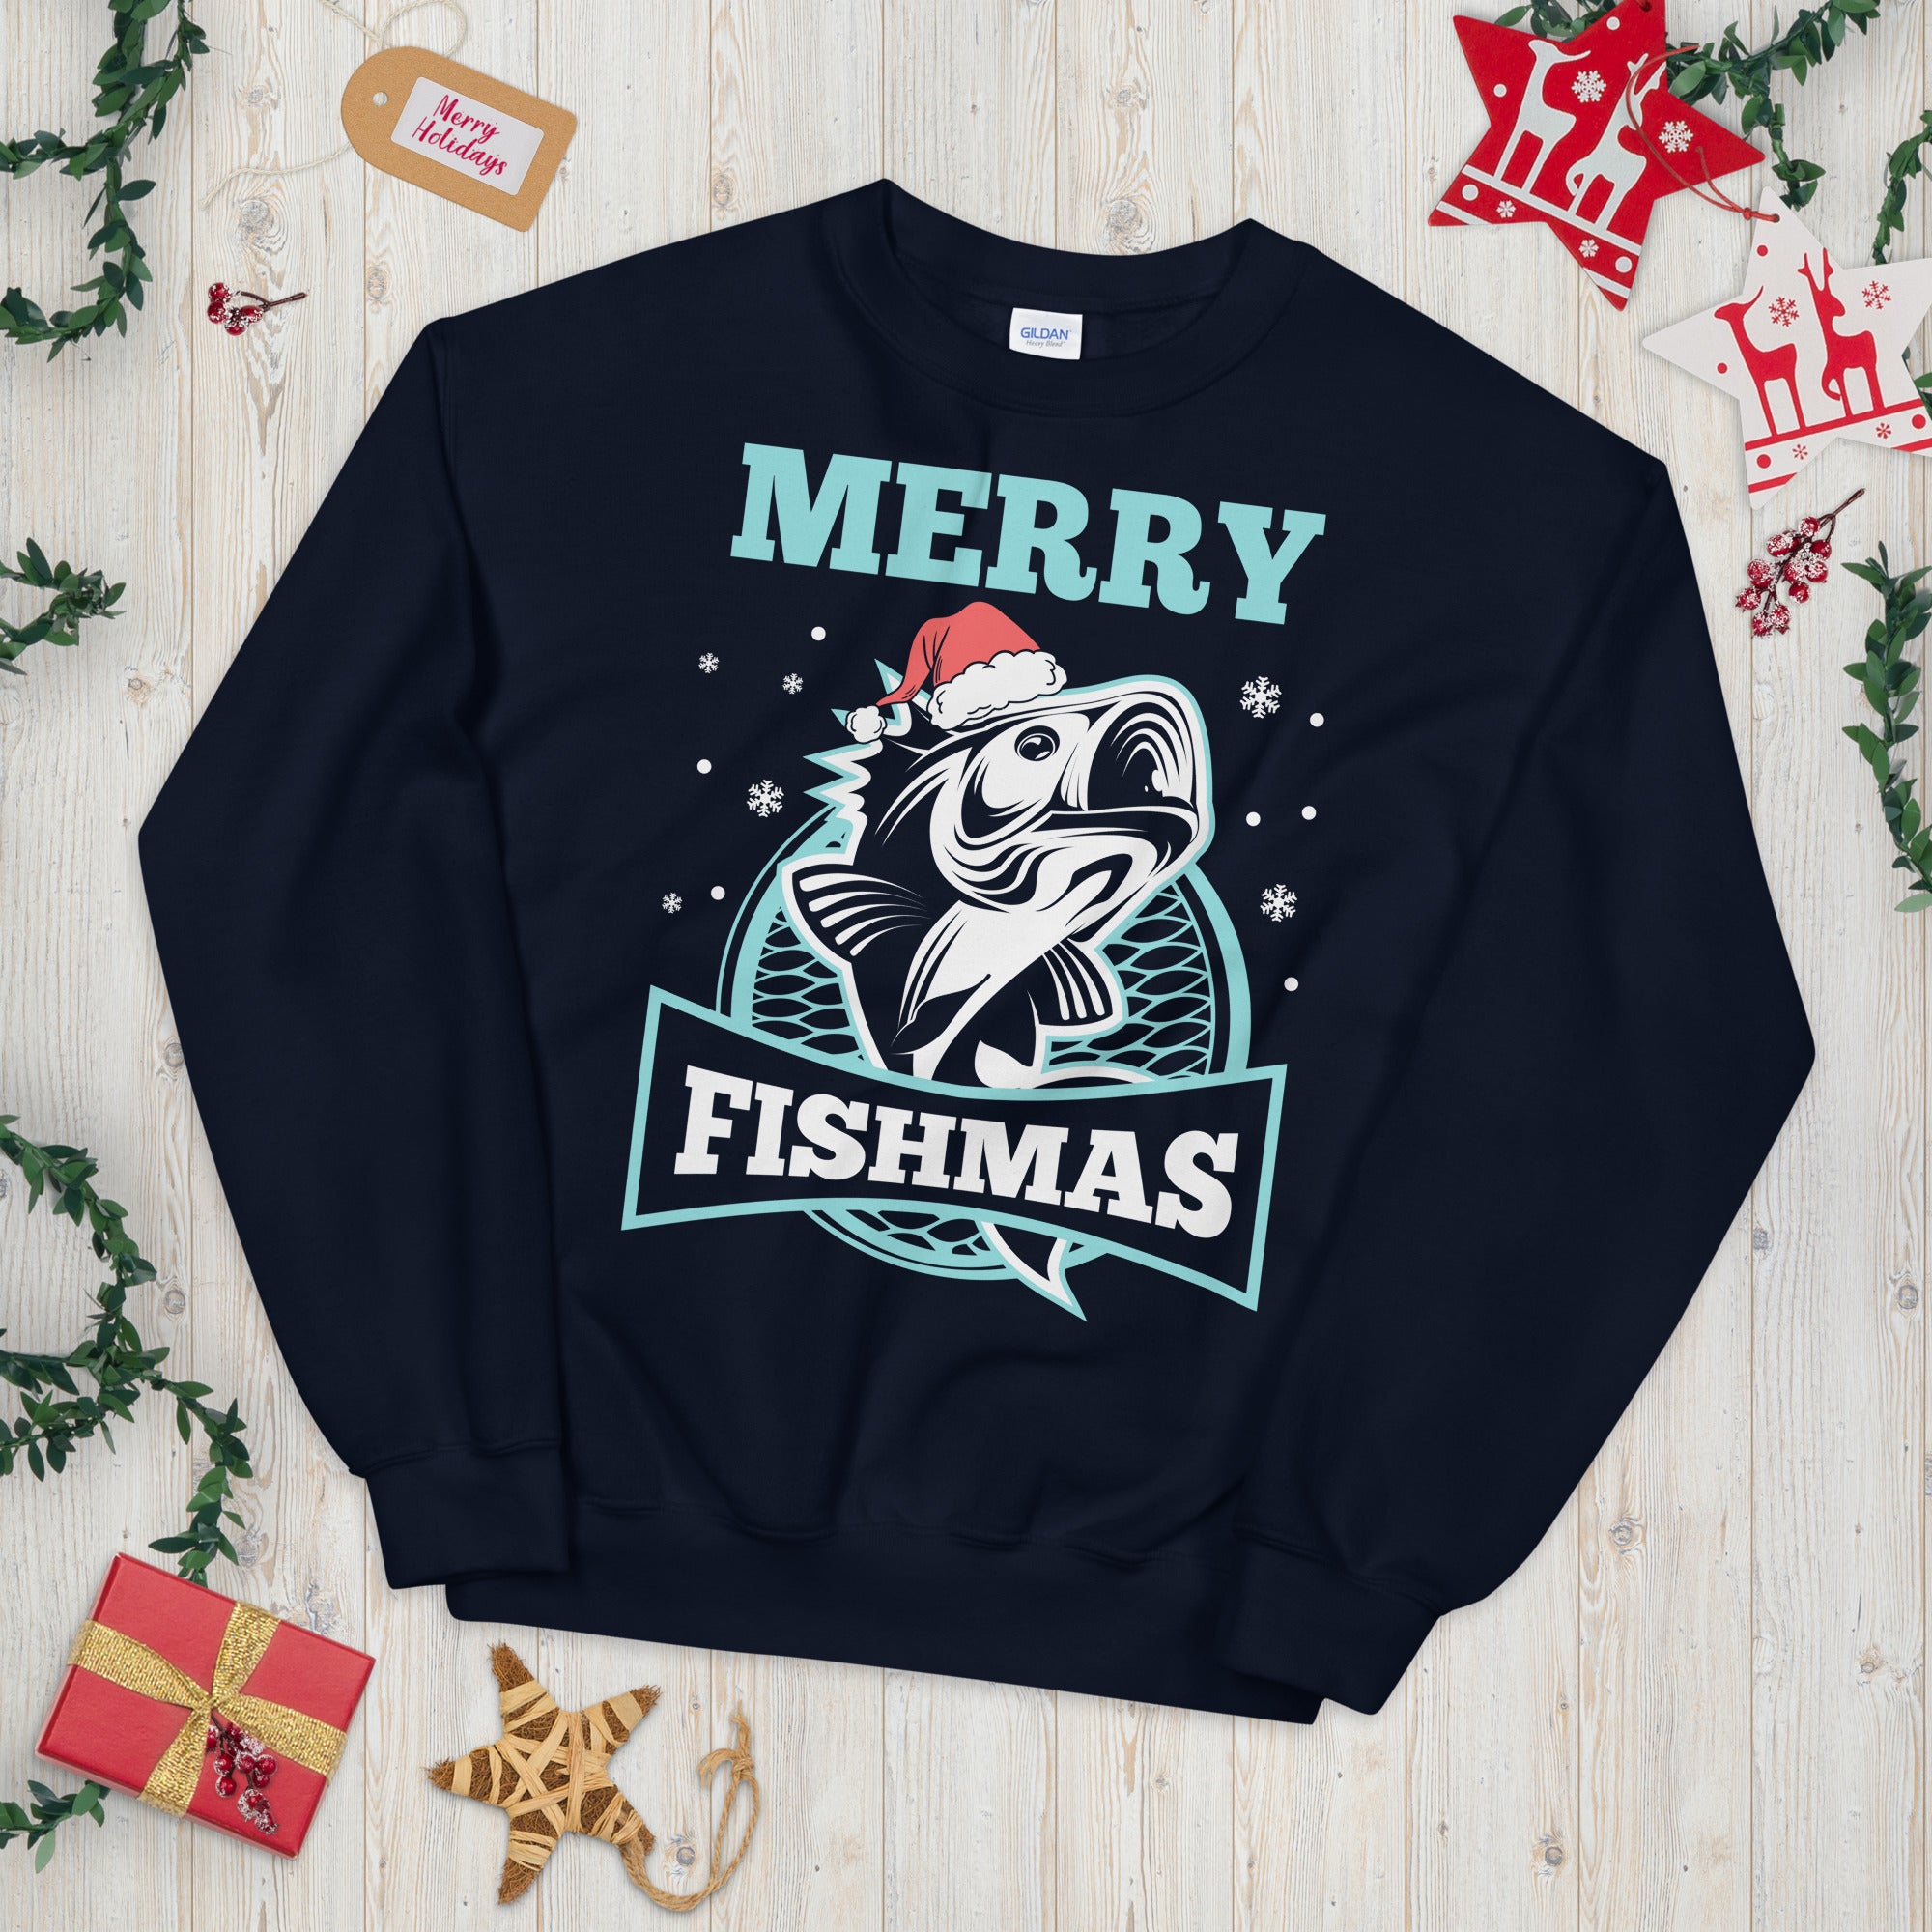 Merry Fishmas Sweater, Christmas Fishing Sweatshirt, Fishing Lover, Fishing Man Shirt, Ugly Christmas Sweater, Fisherman Santa Sweatshirt